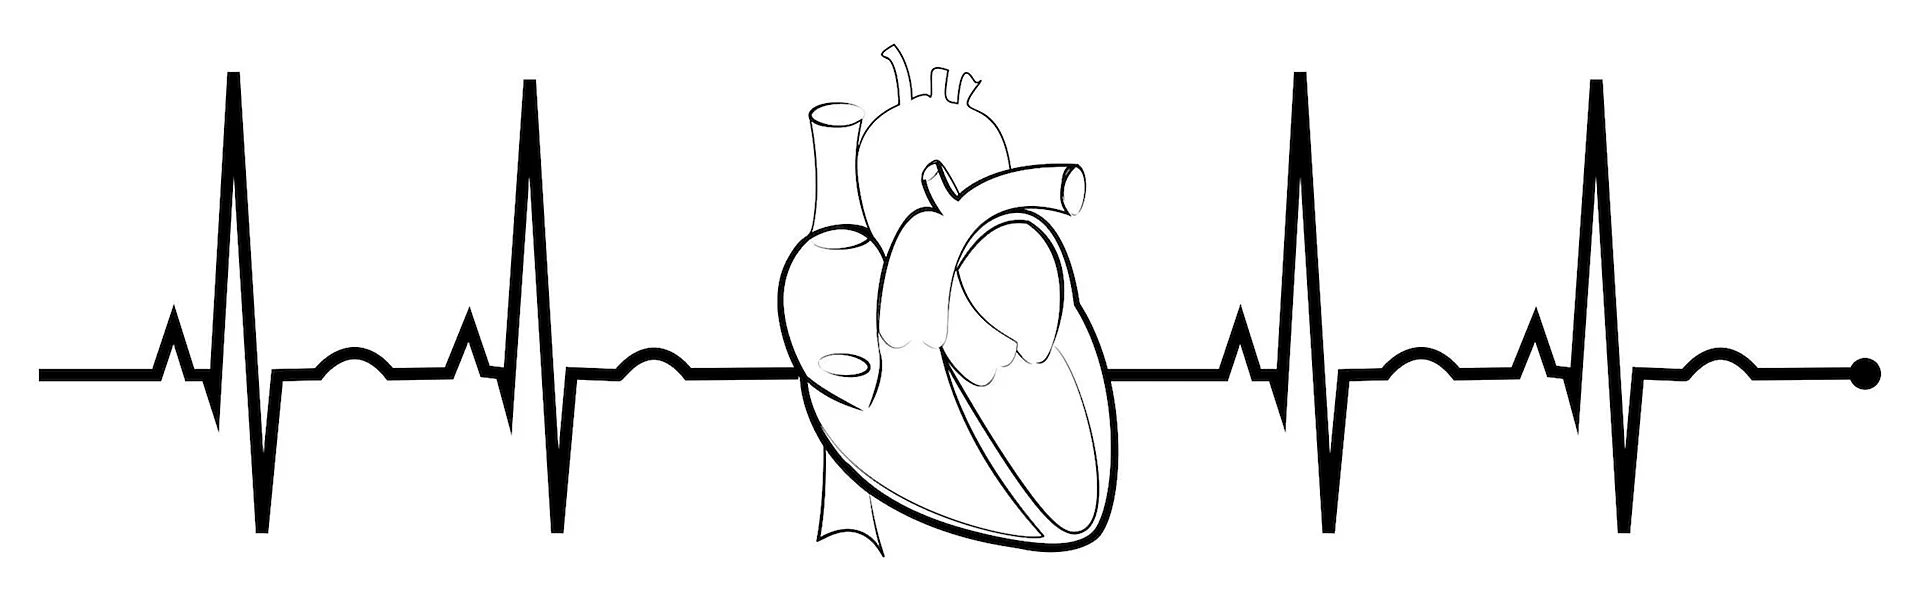 Кардиограмма сердца